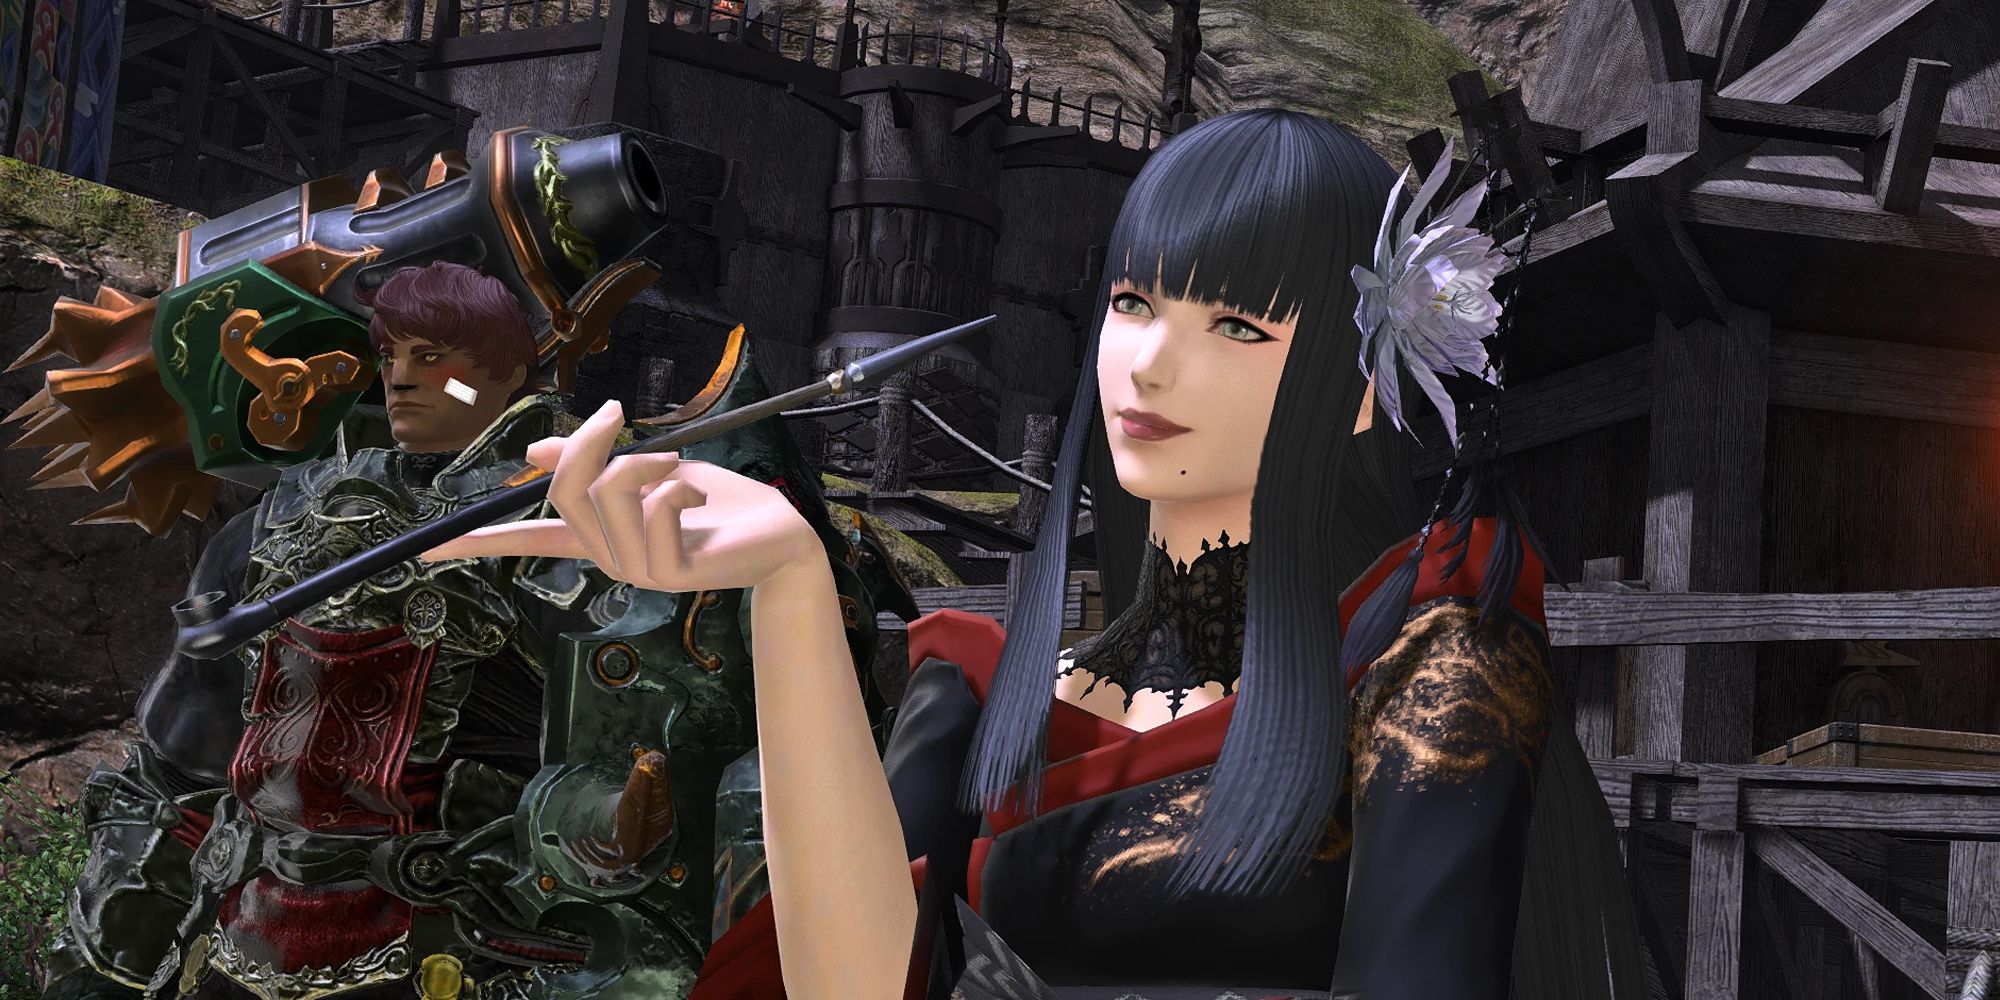 Yotsuyu from Final Fantasy 14 posing in a cutscene